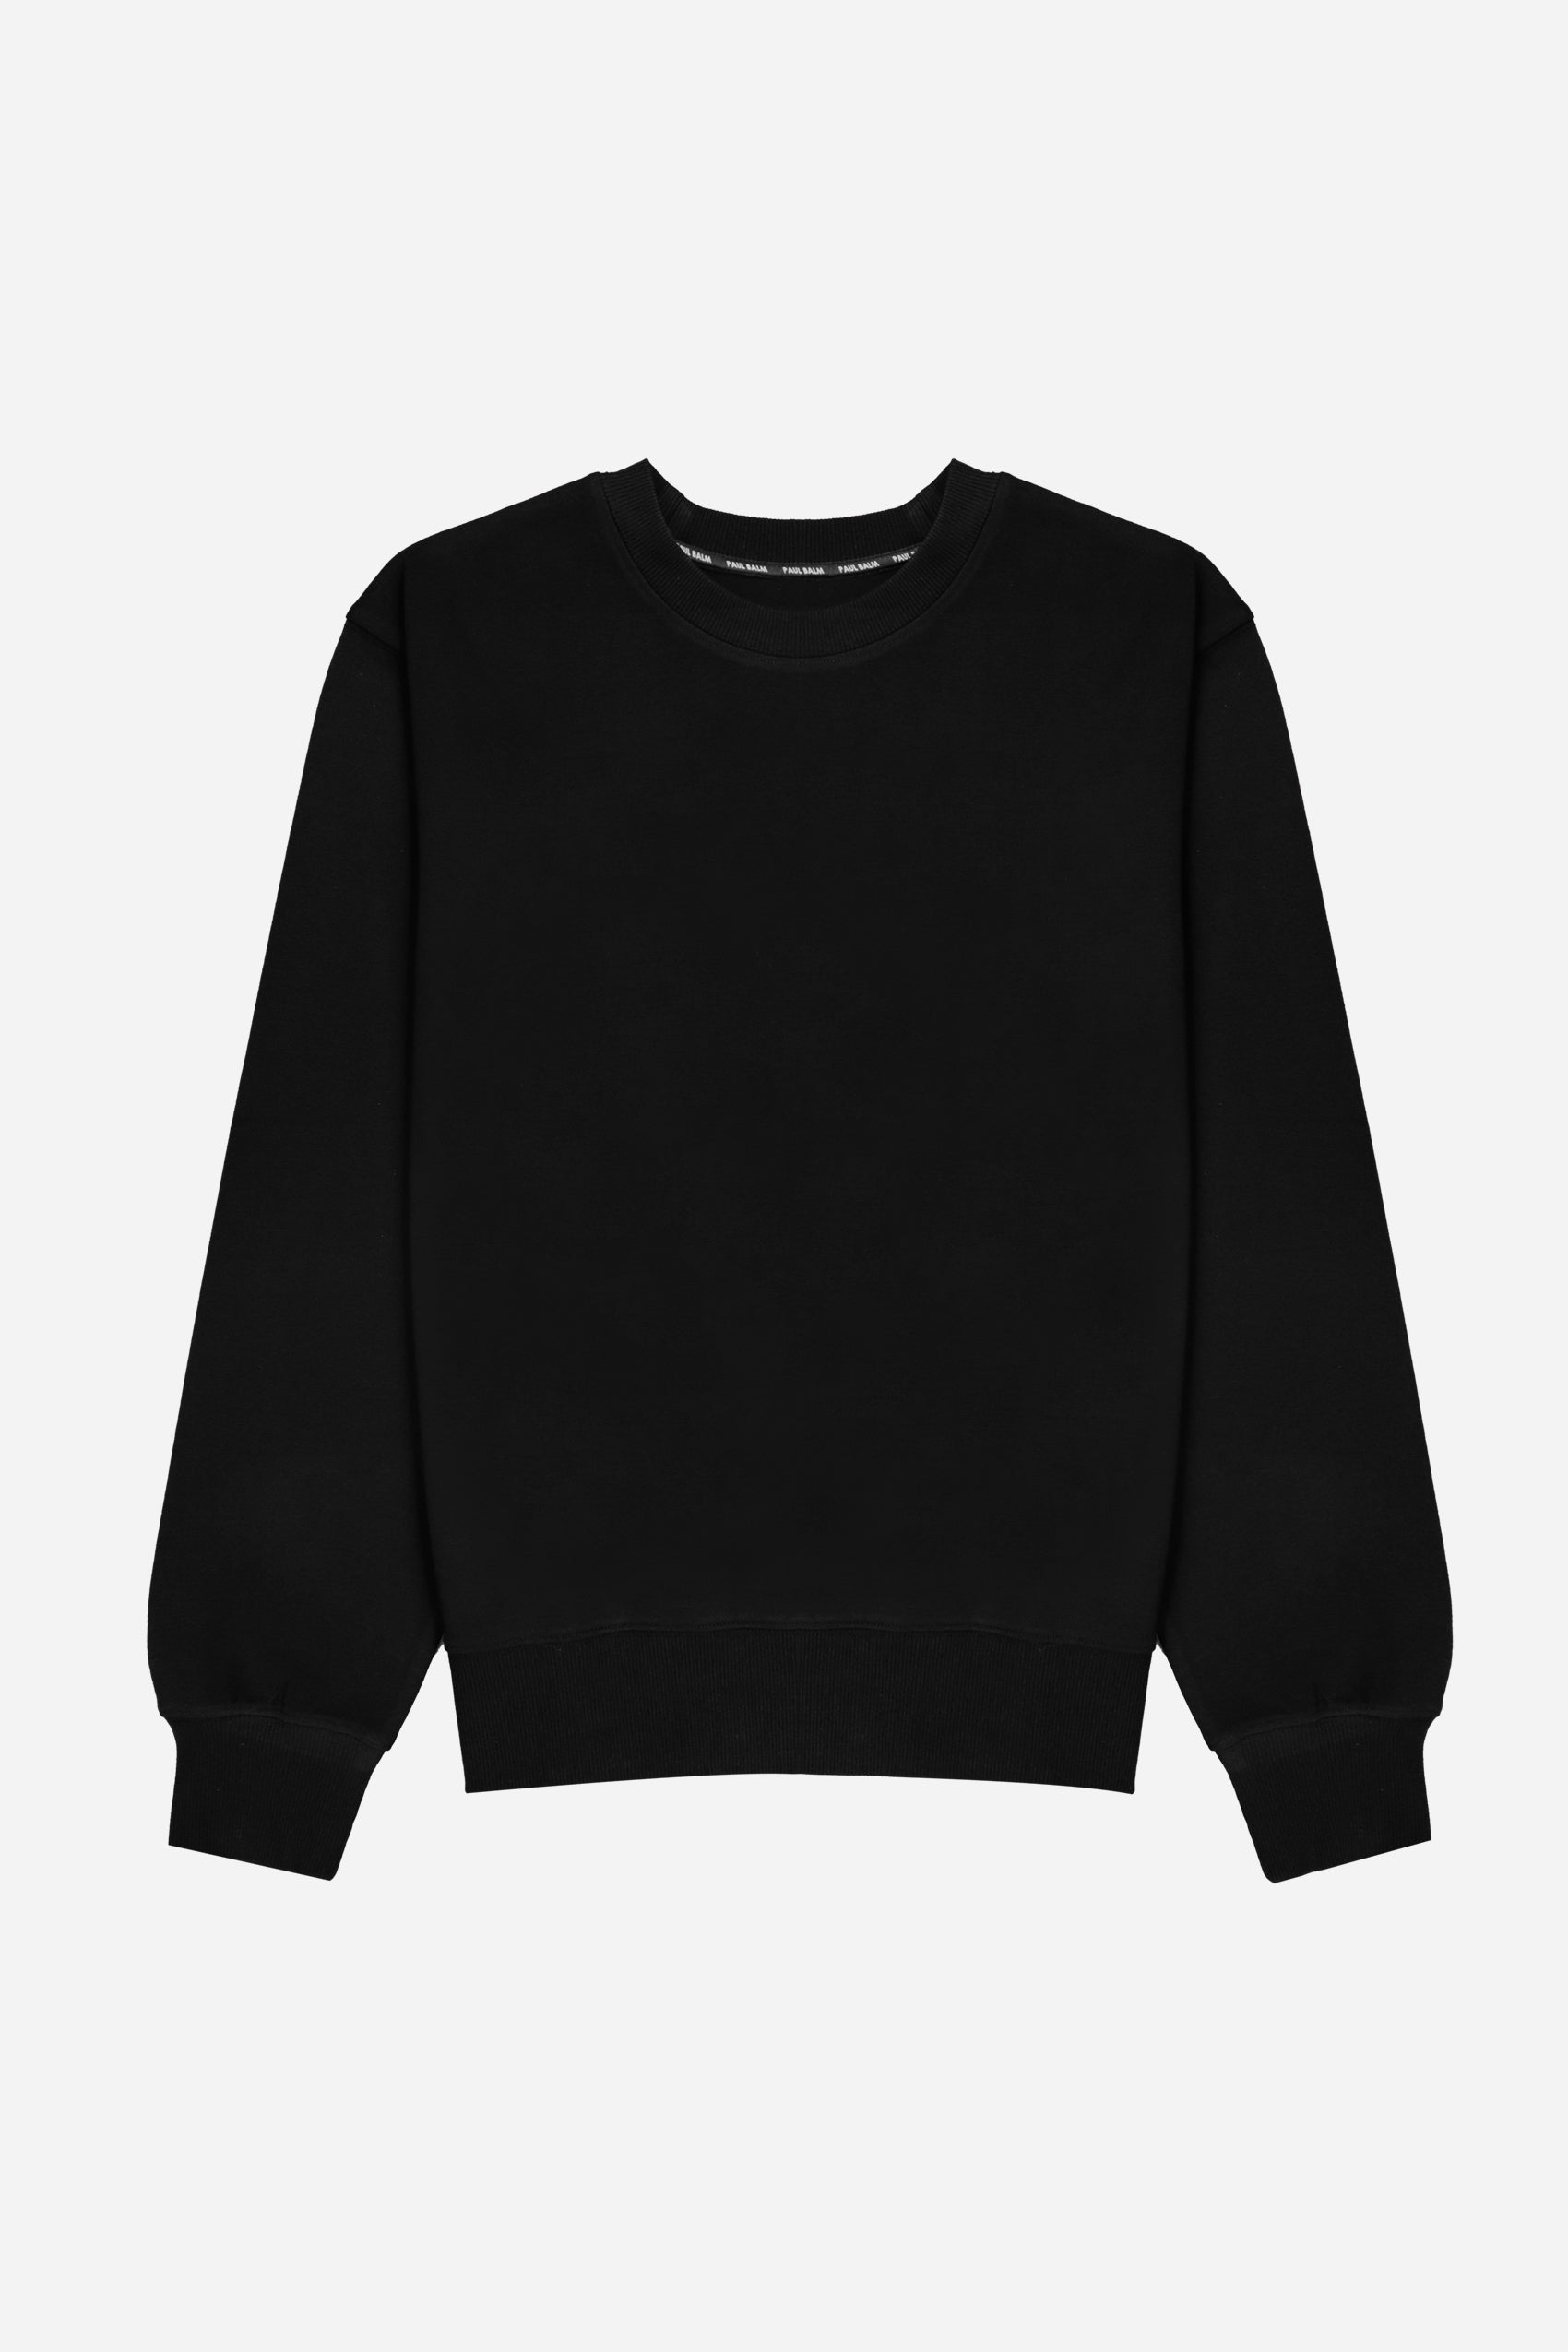 Basic Sweatshirt black - PAUL BALM WORLD